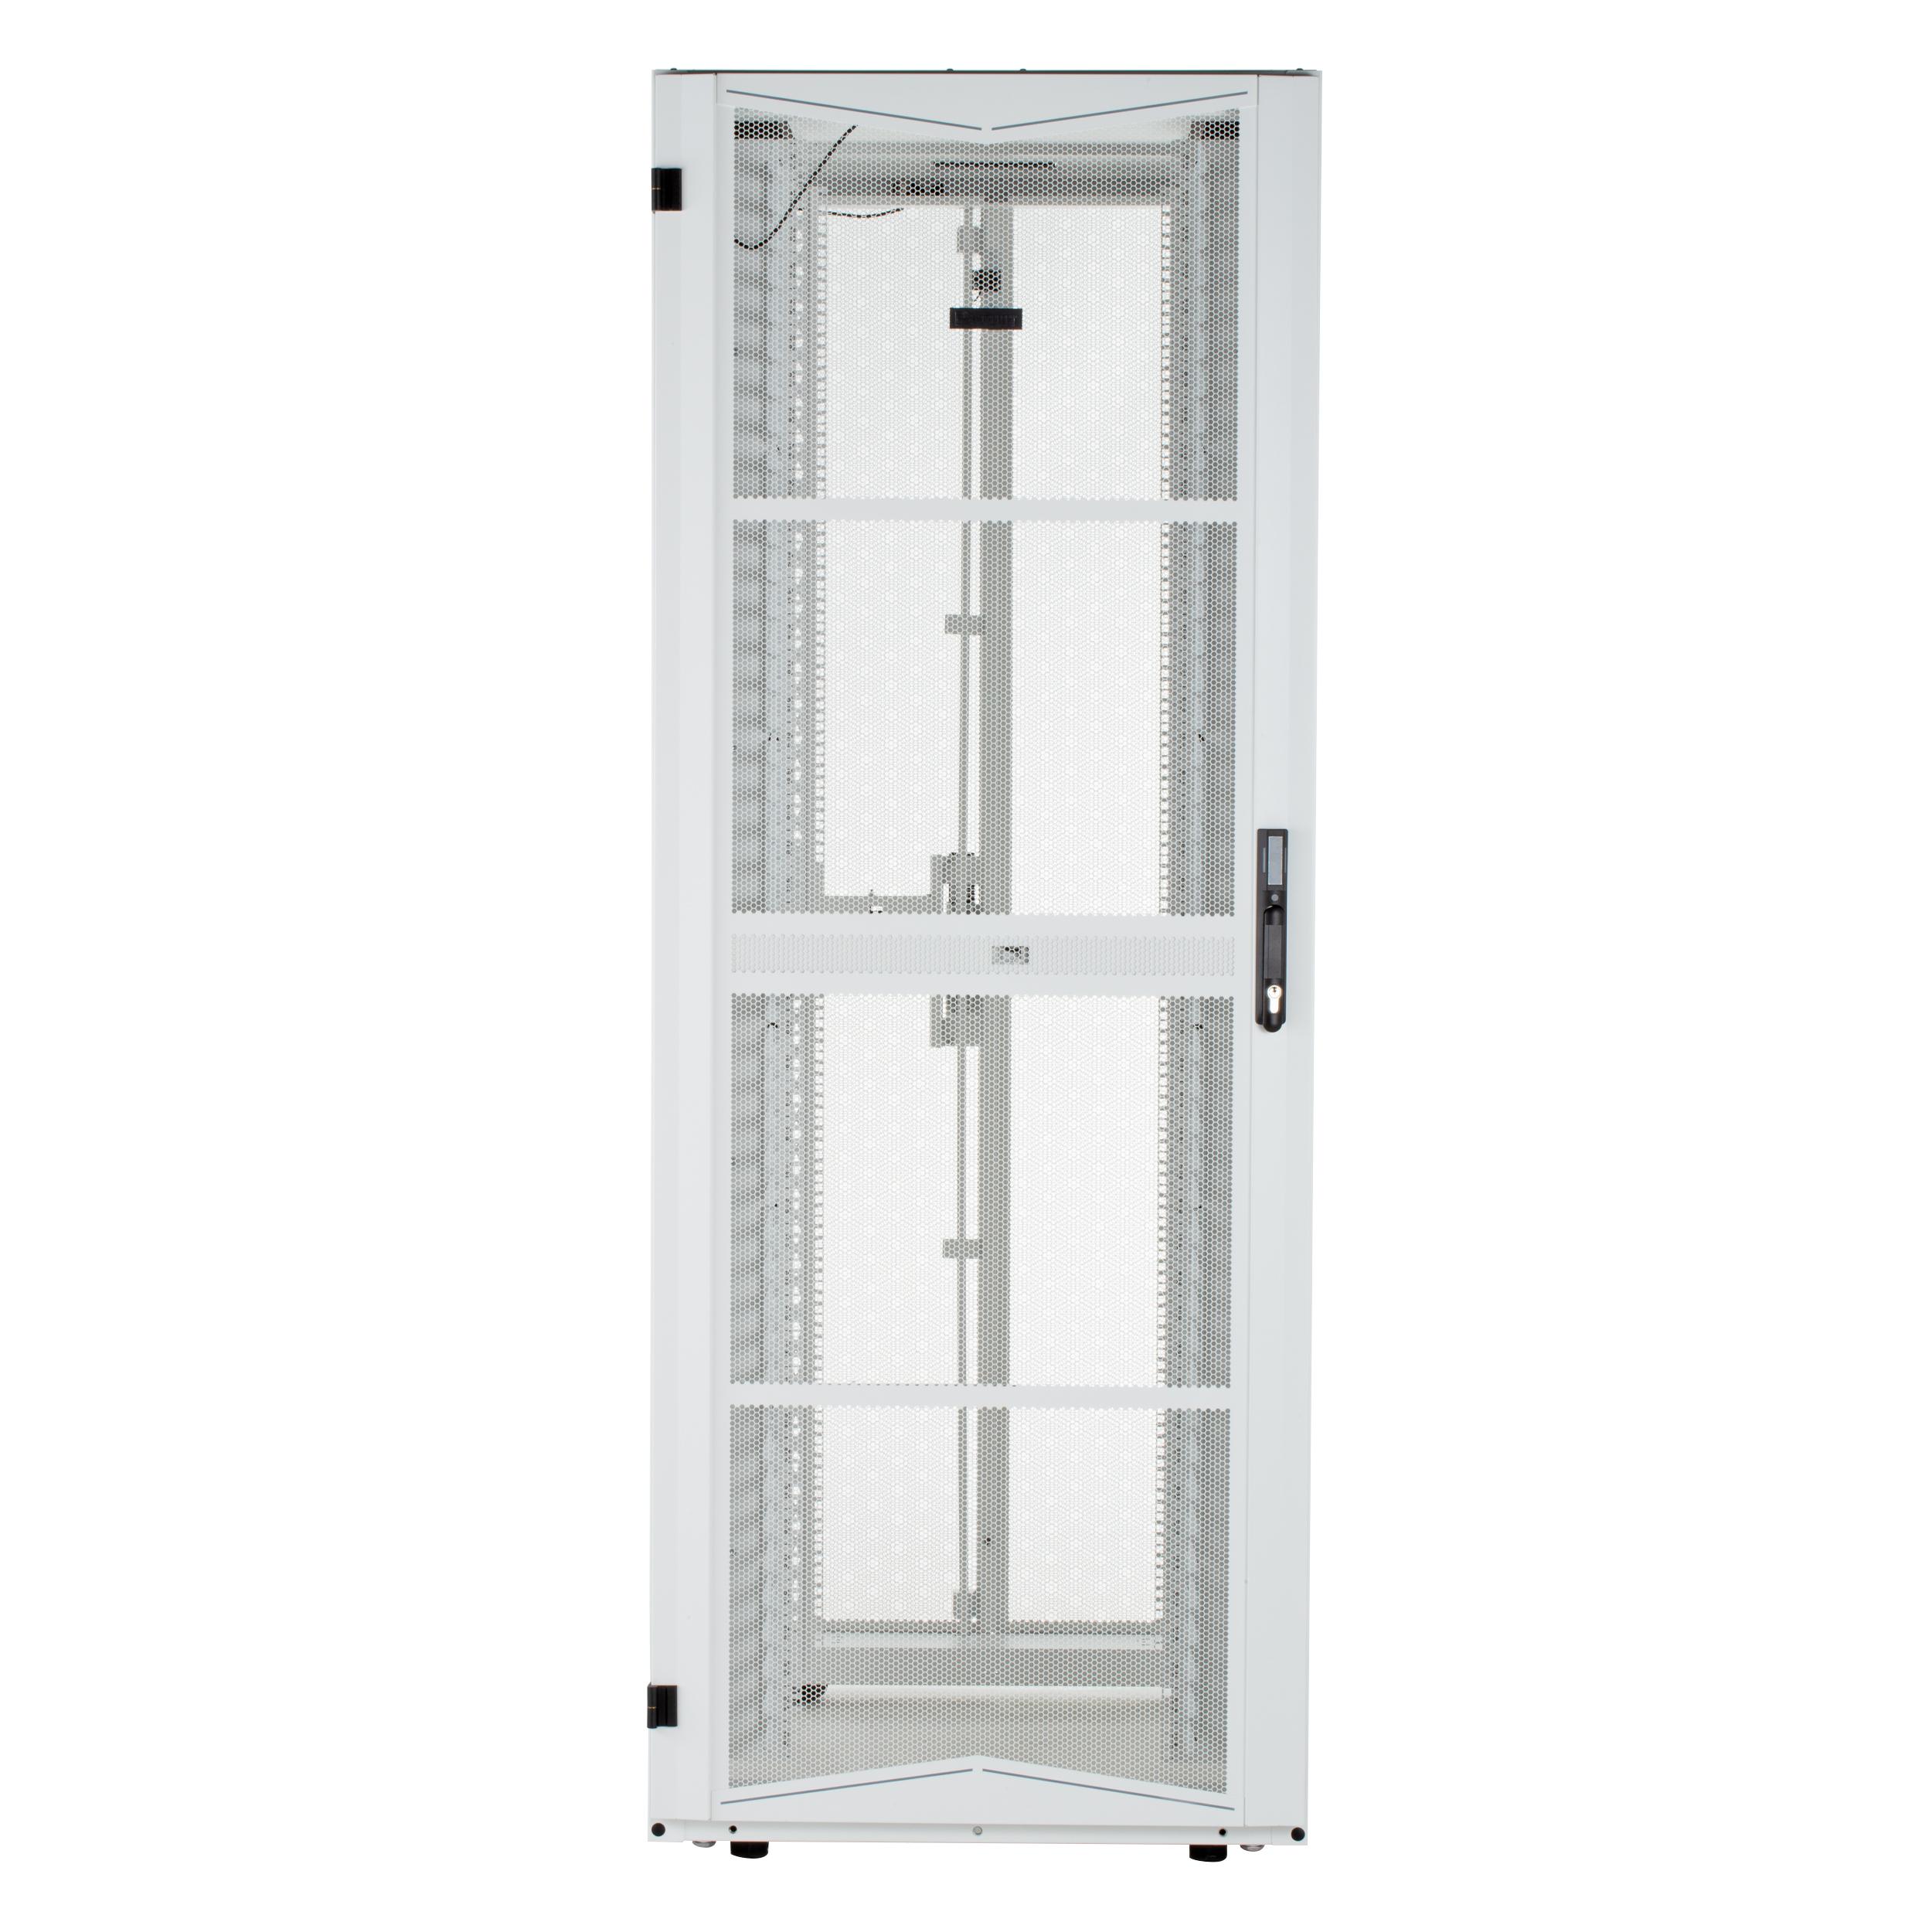 Panduit XG84522WS0005 FlexFusion Cabinet, 800mm x 45RU x 1200mm, White